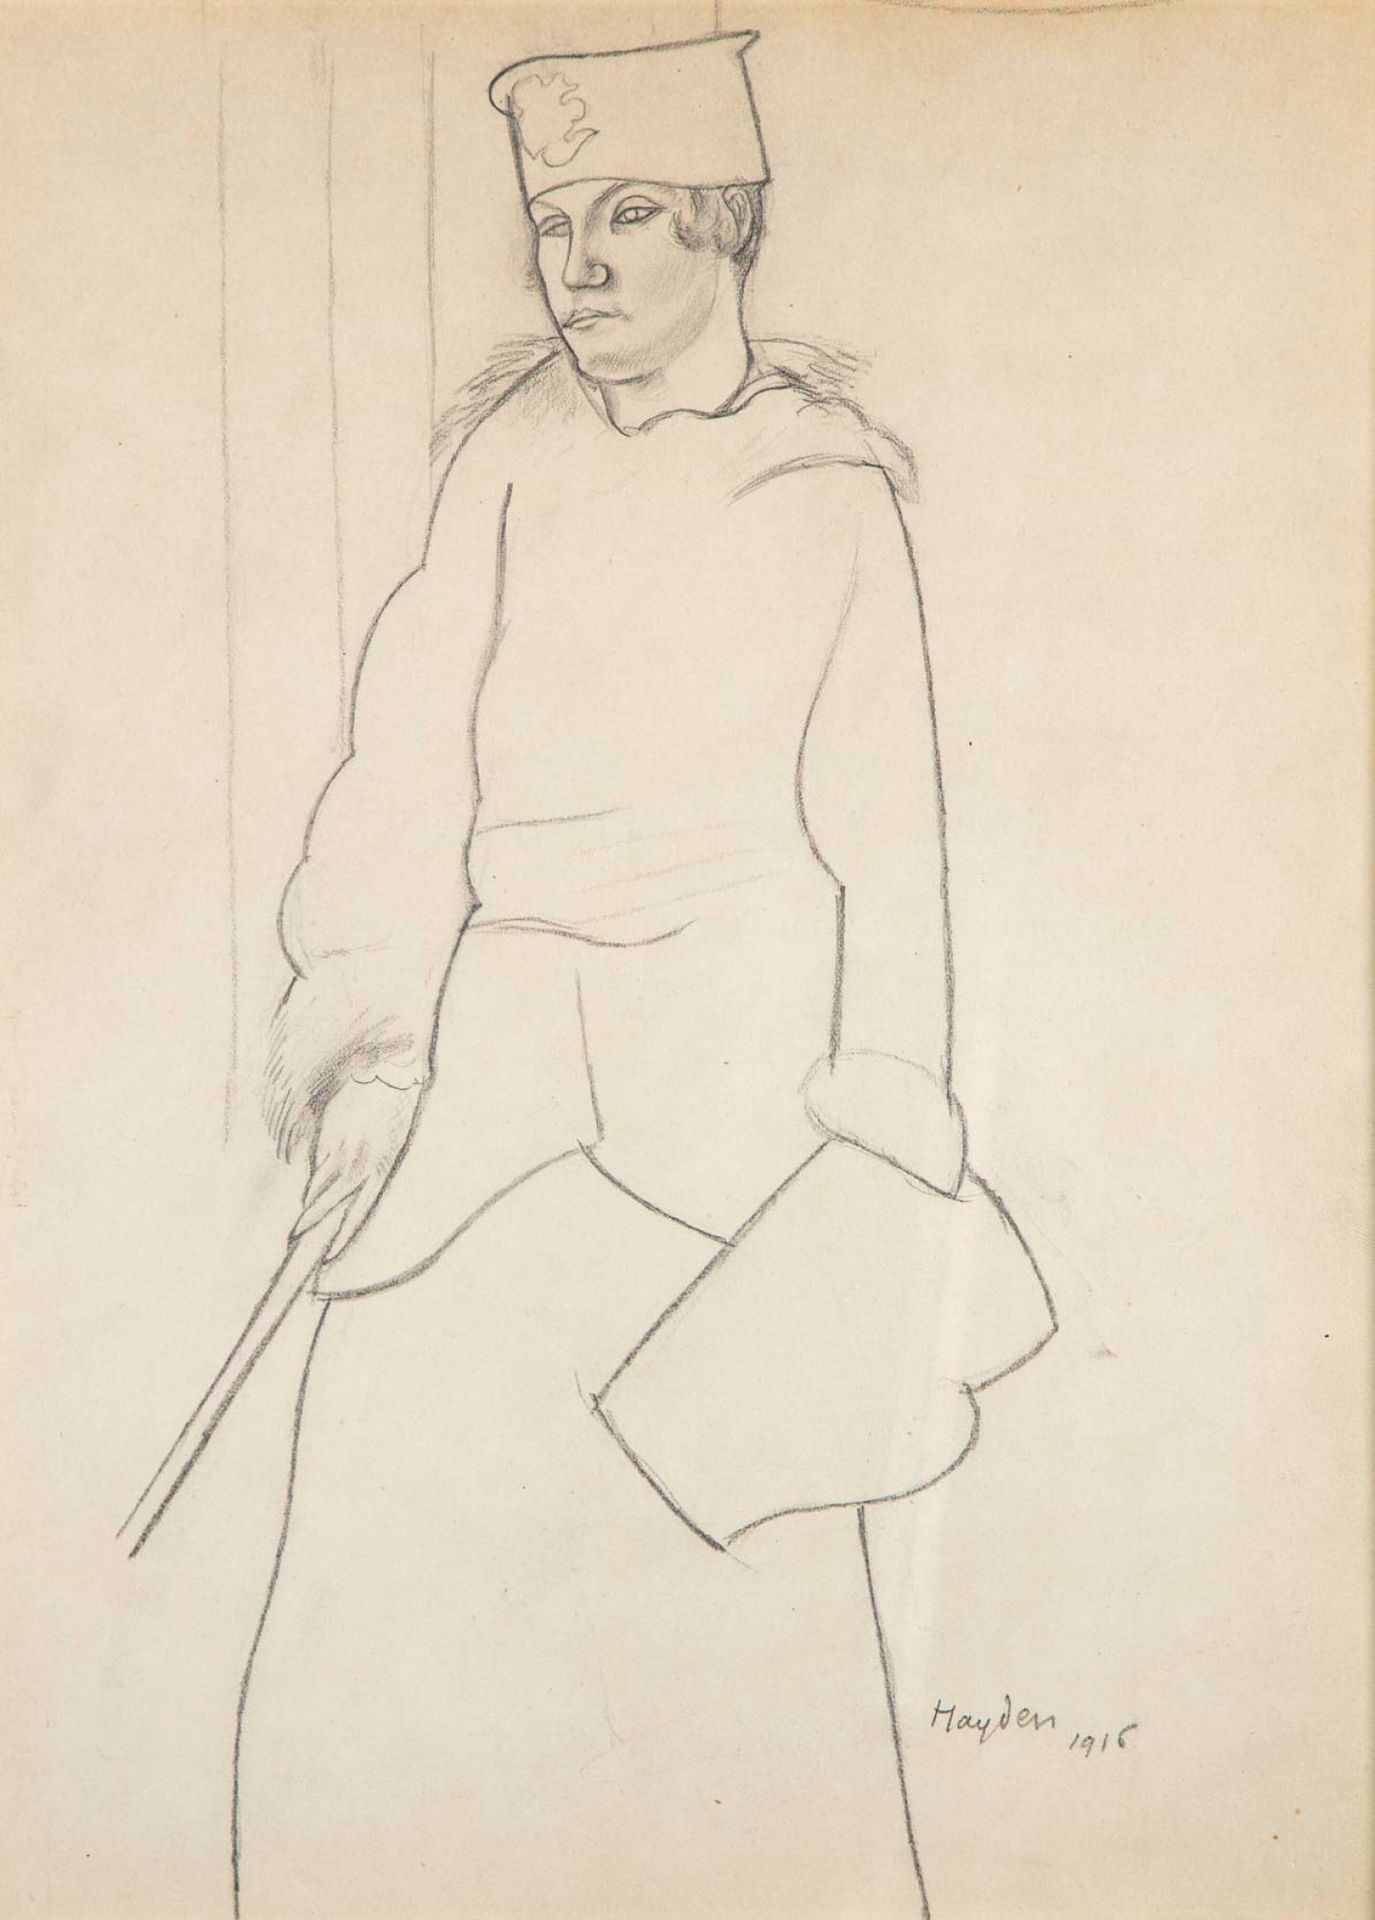 Henri HAYDEN 亨利-海登(1883-1970)

戴马夫的女人

纸上铅笔。

右下方有签名和日期1916年

32 x 24,8 cm

出处：A&hellip;